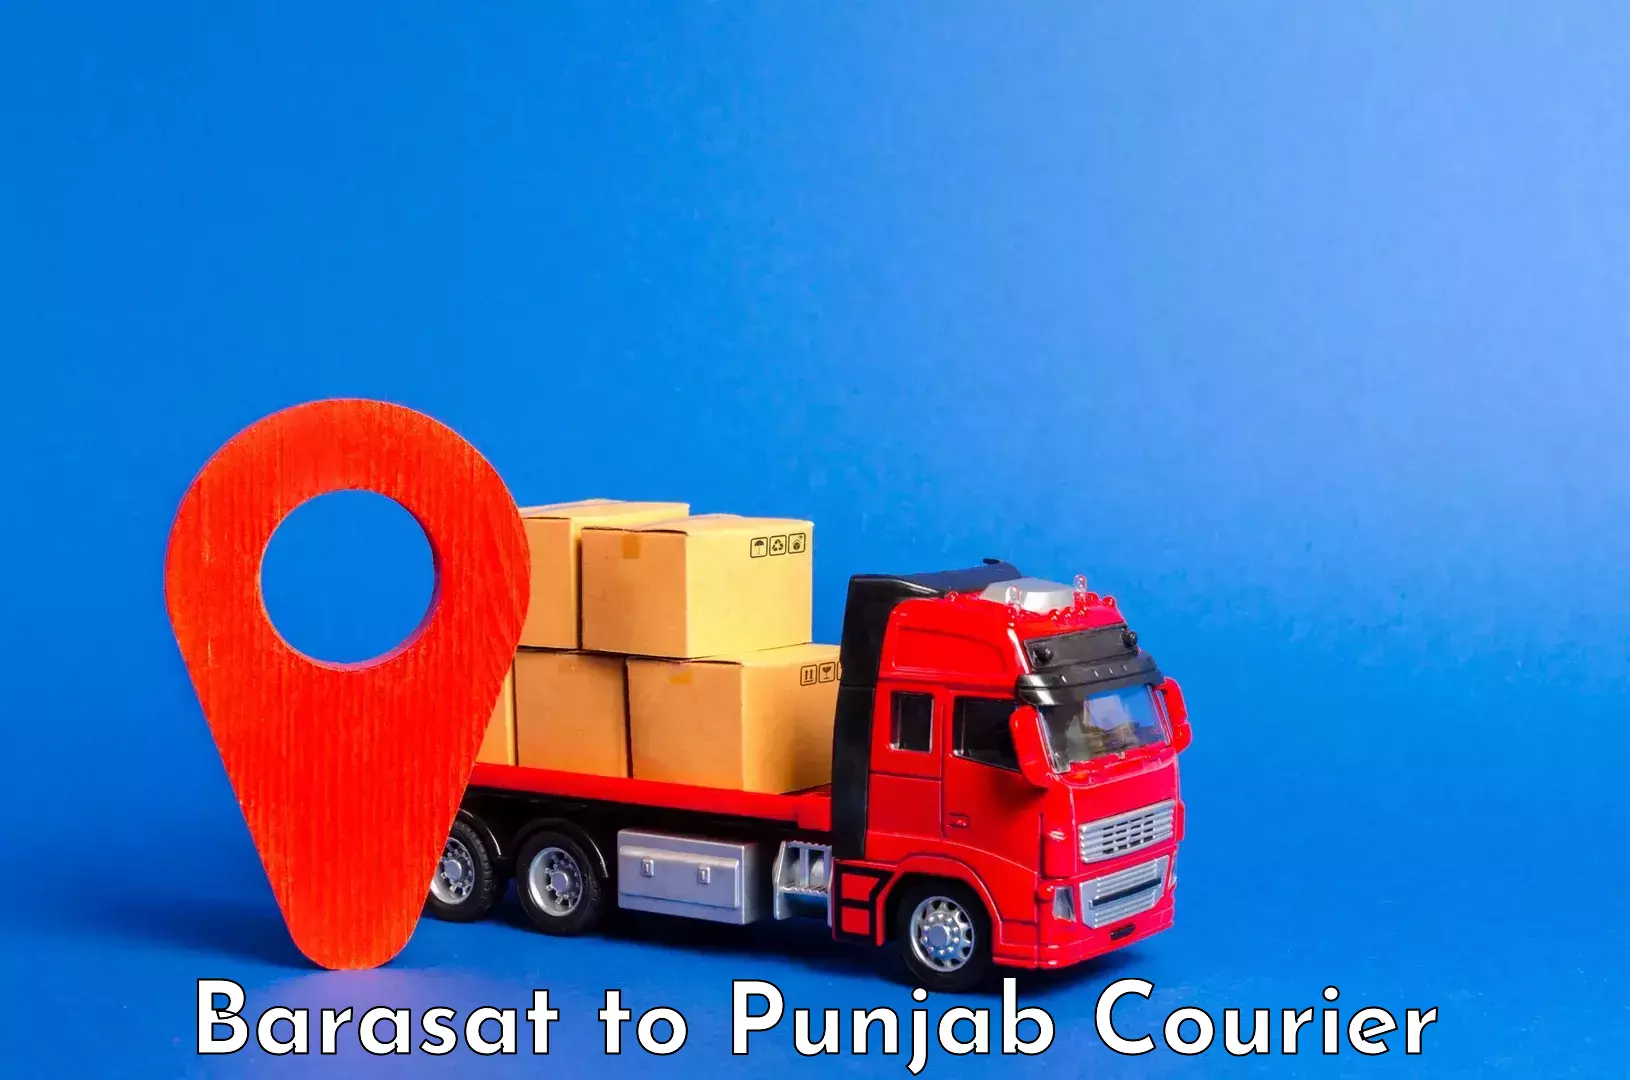 Luggage delivery app Barasat to Malerkotla